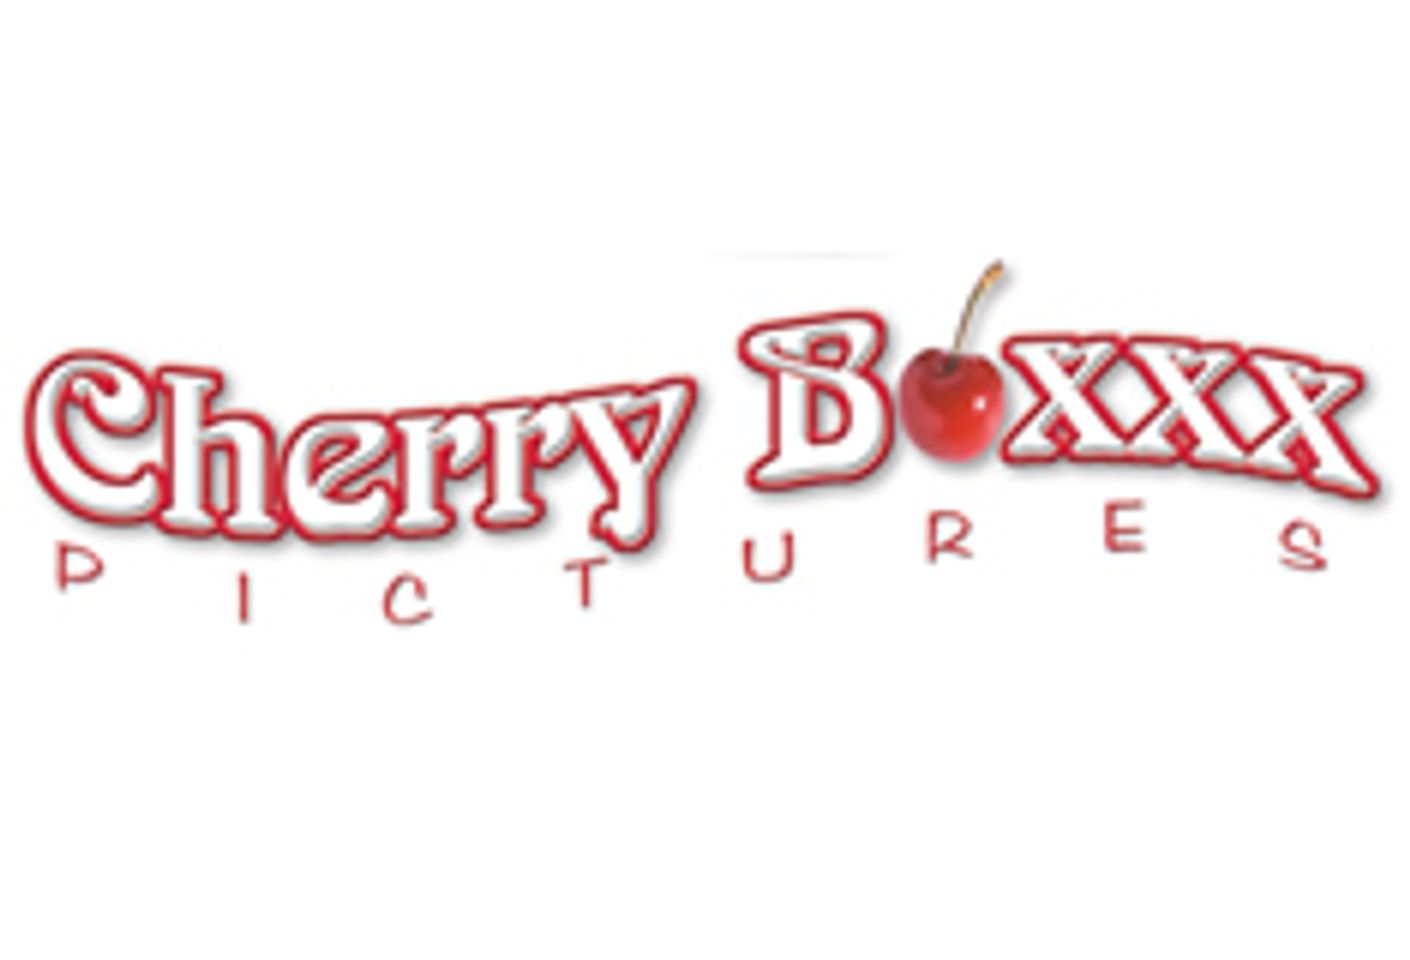 Cherry Boxxx Releases Sneak Peek at 'Sunny Leone's Watch Me'